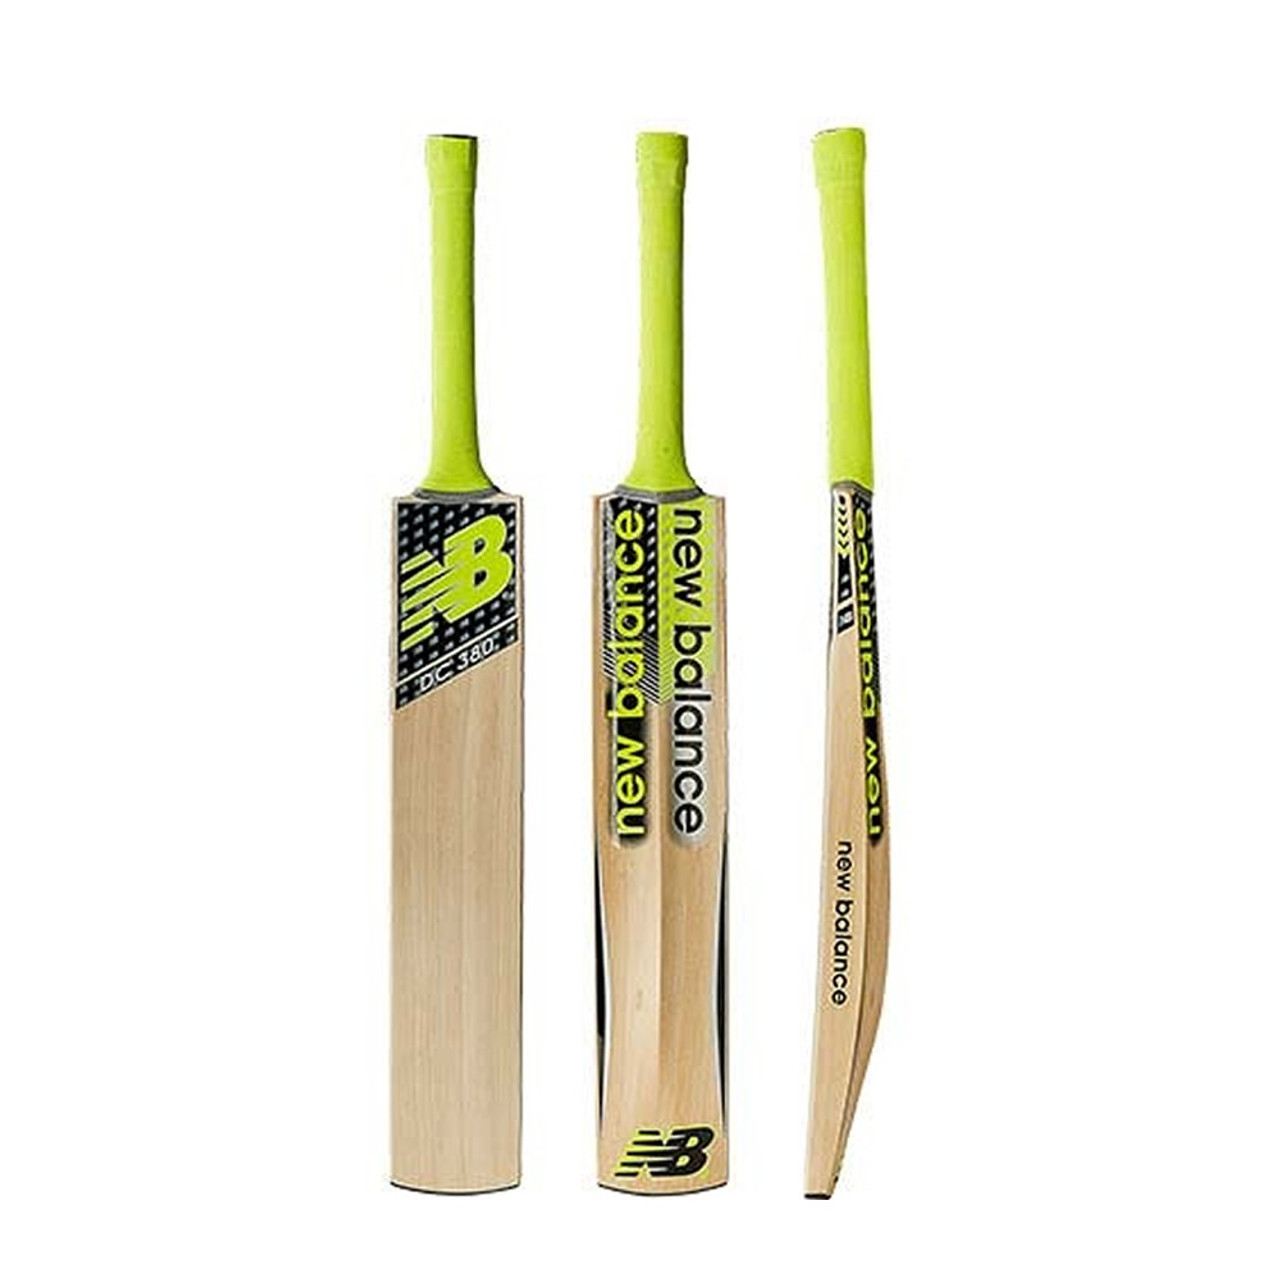 new new balance cricket bats